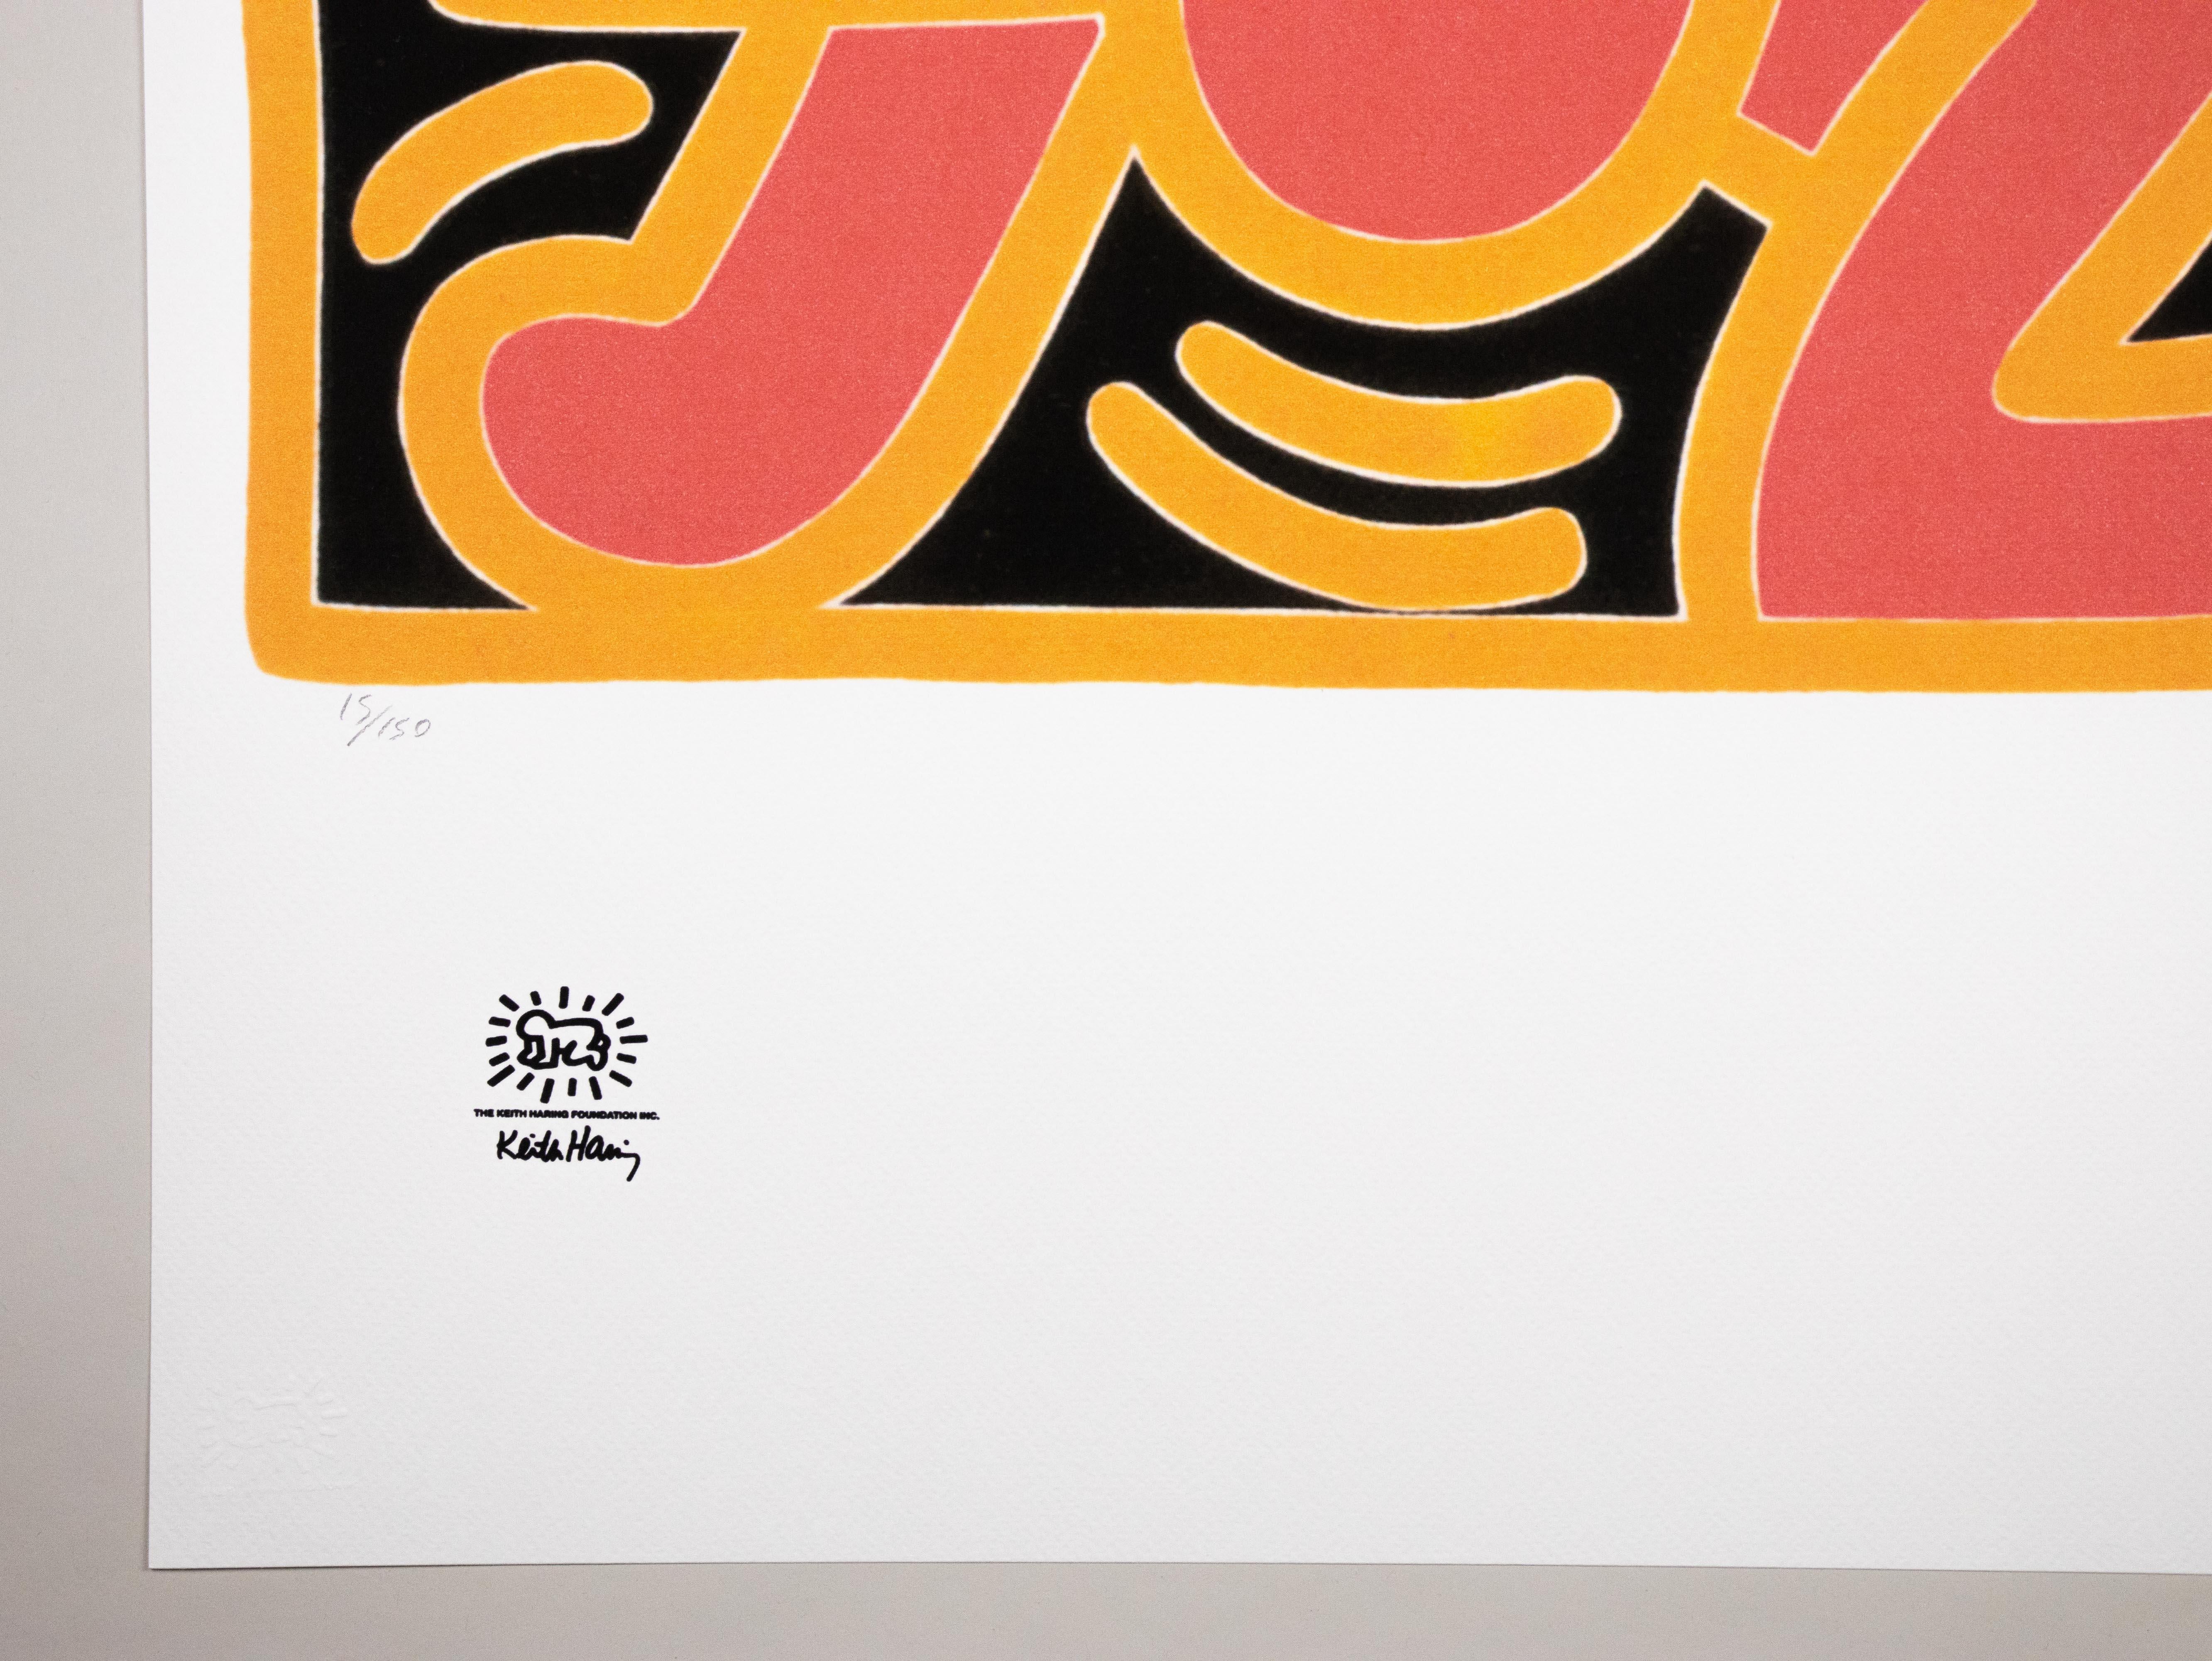 Lithographie – limitierte Auflage 15/150 Exemplare – Keith Haring Foundation Inc. im Angebot 2